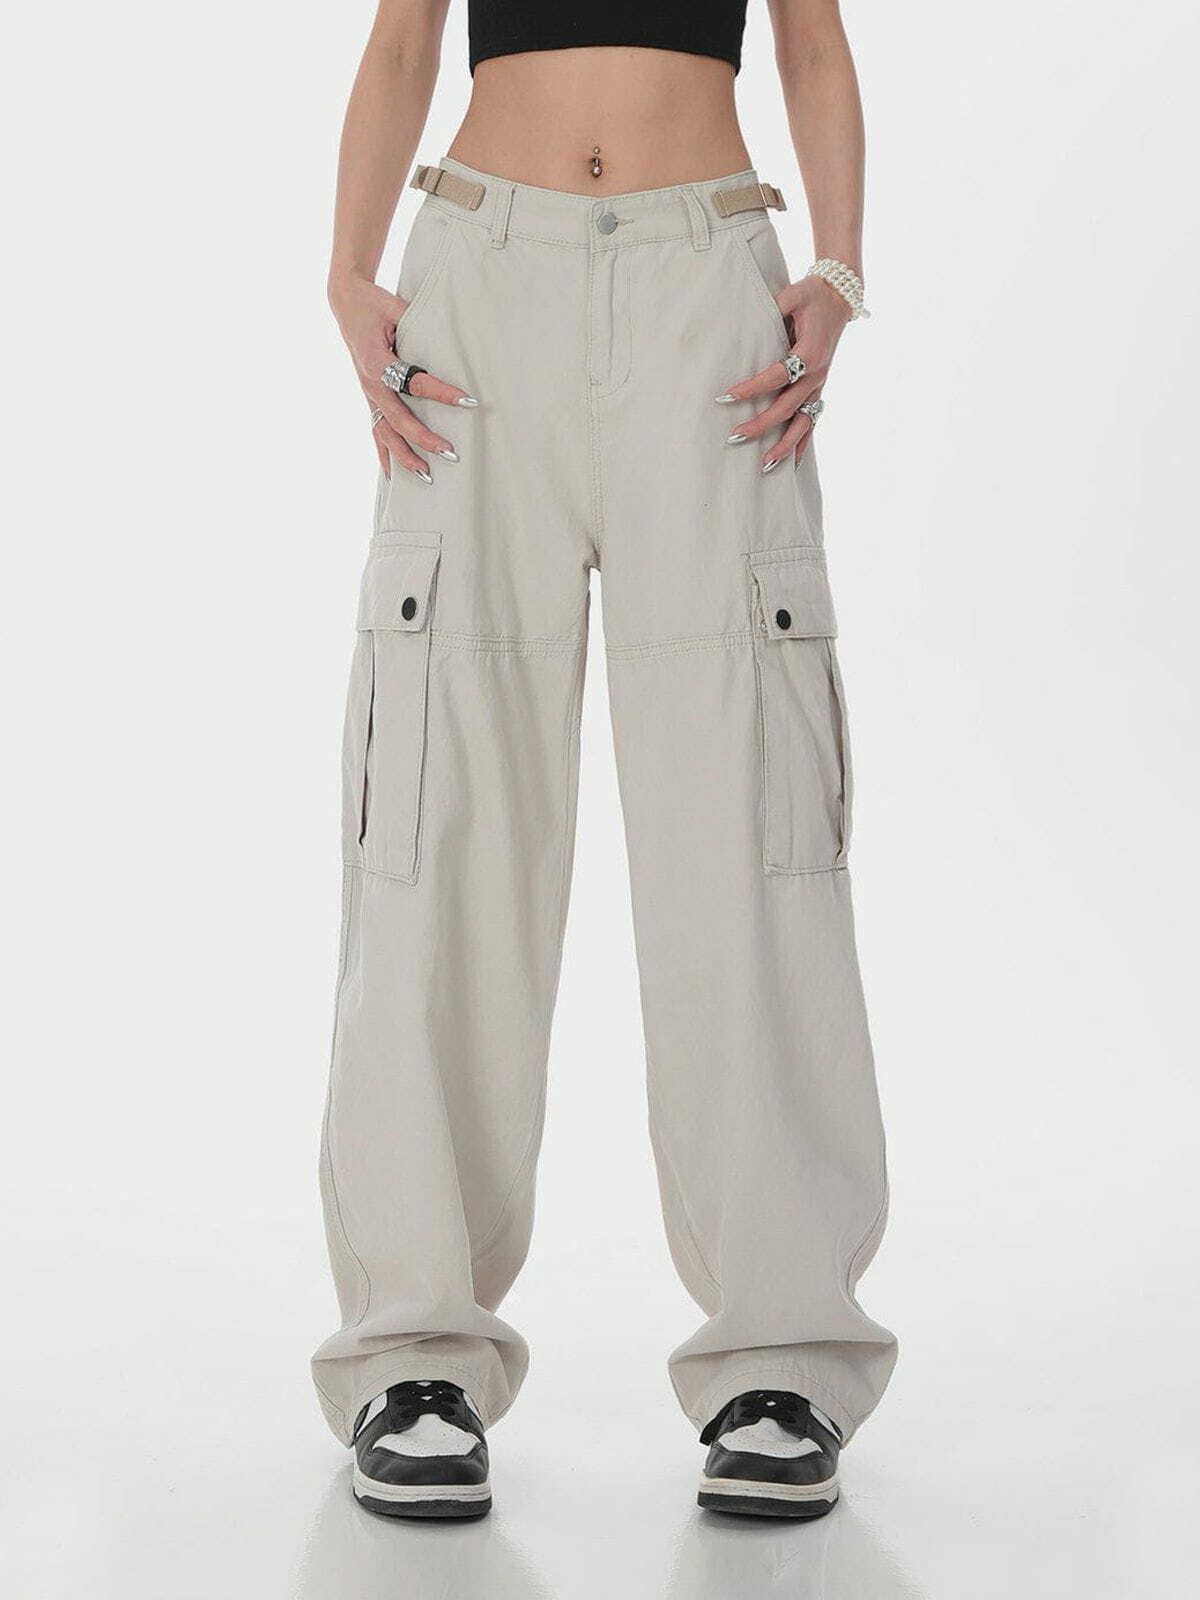 retro straight cargo pants edgy & vibrant streetwear 5923